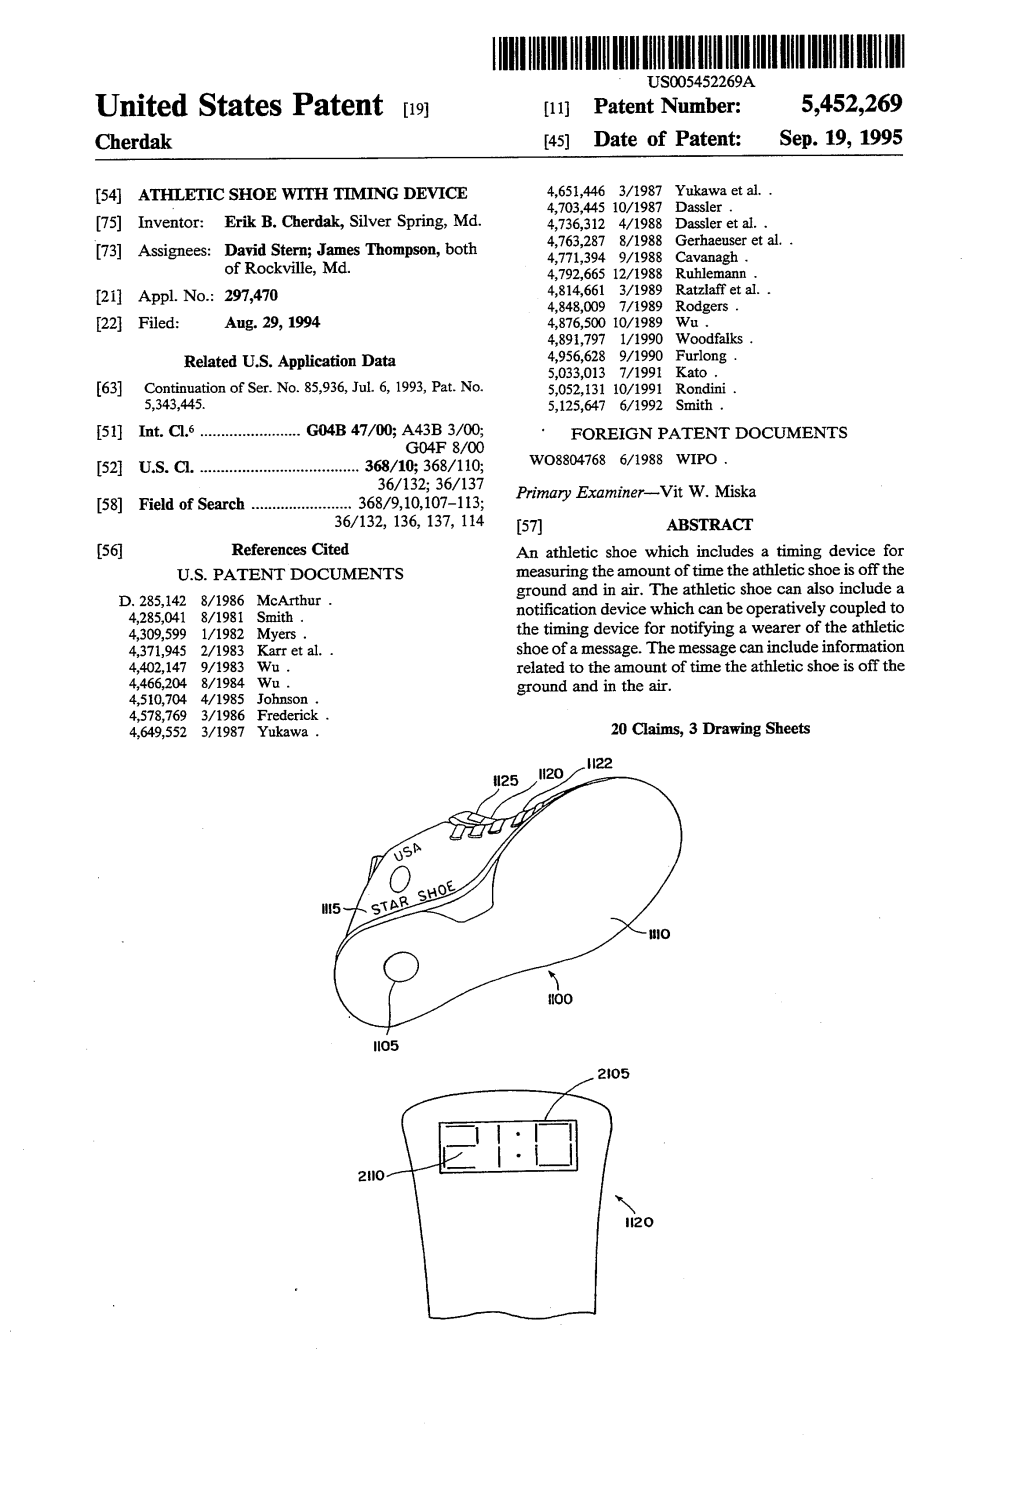 United States Patent (19) 11 Patent Number: 5,452,269 Cherdak (45) Date of Patent: Sep